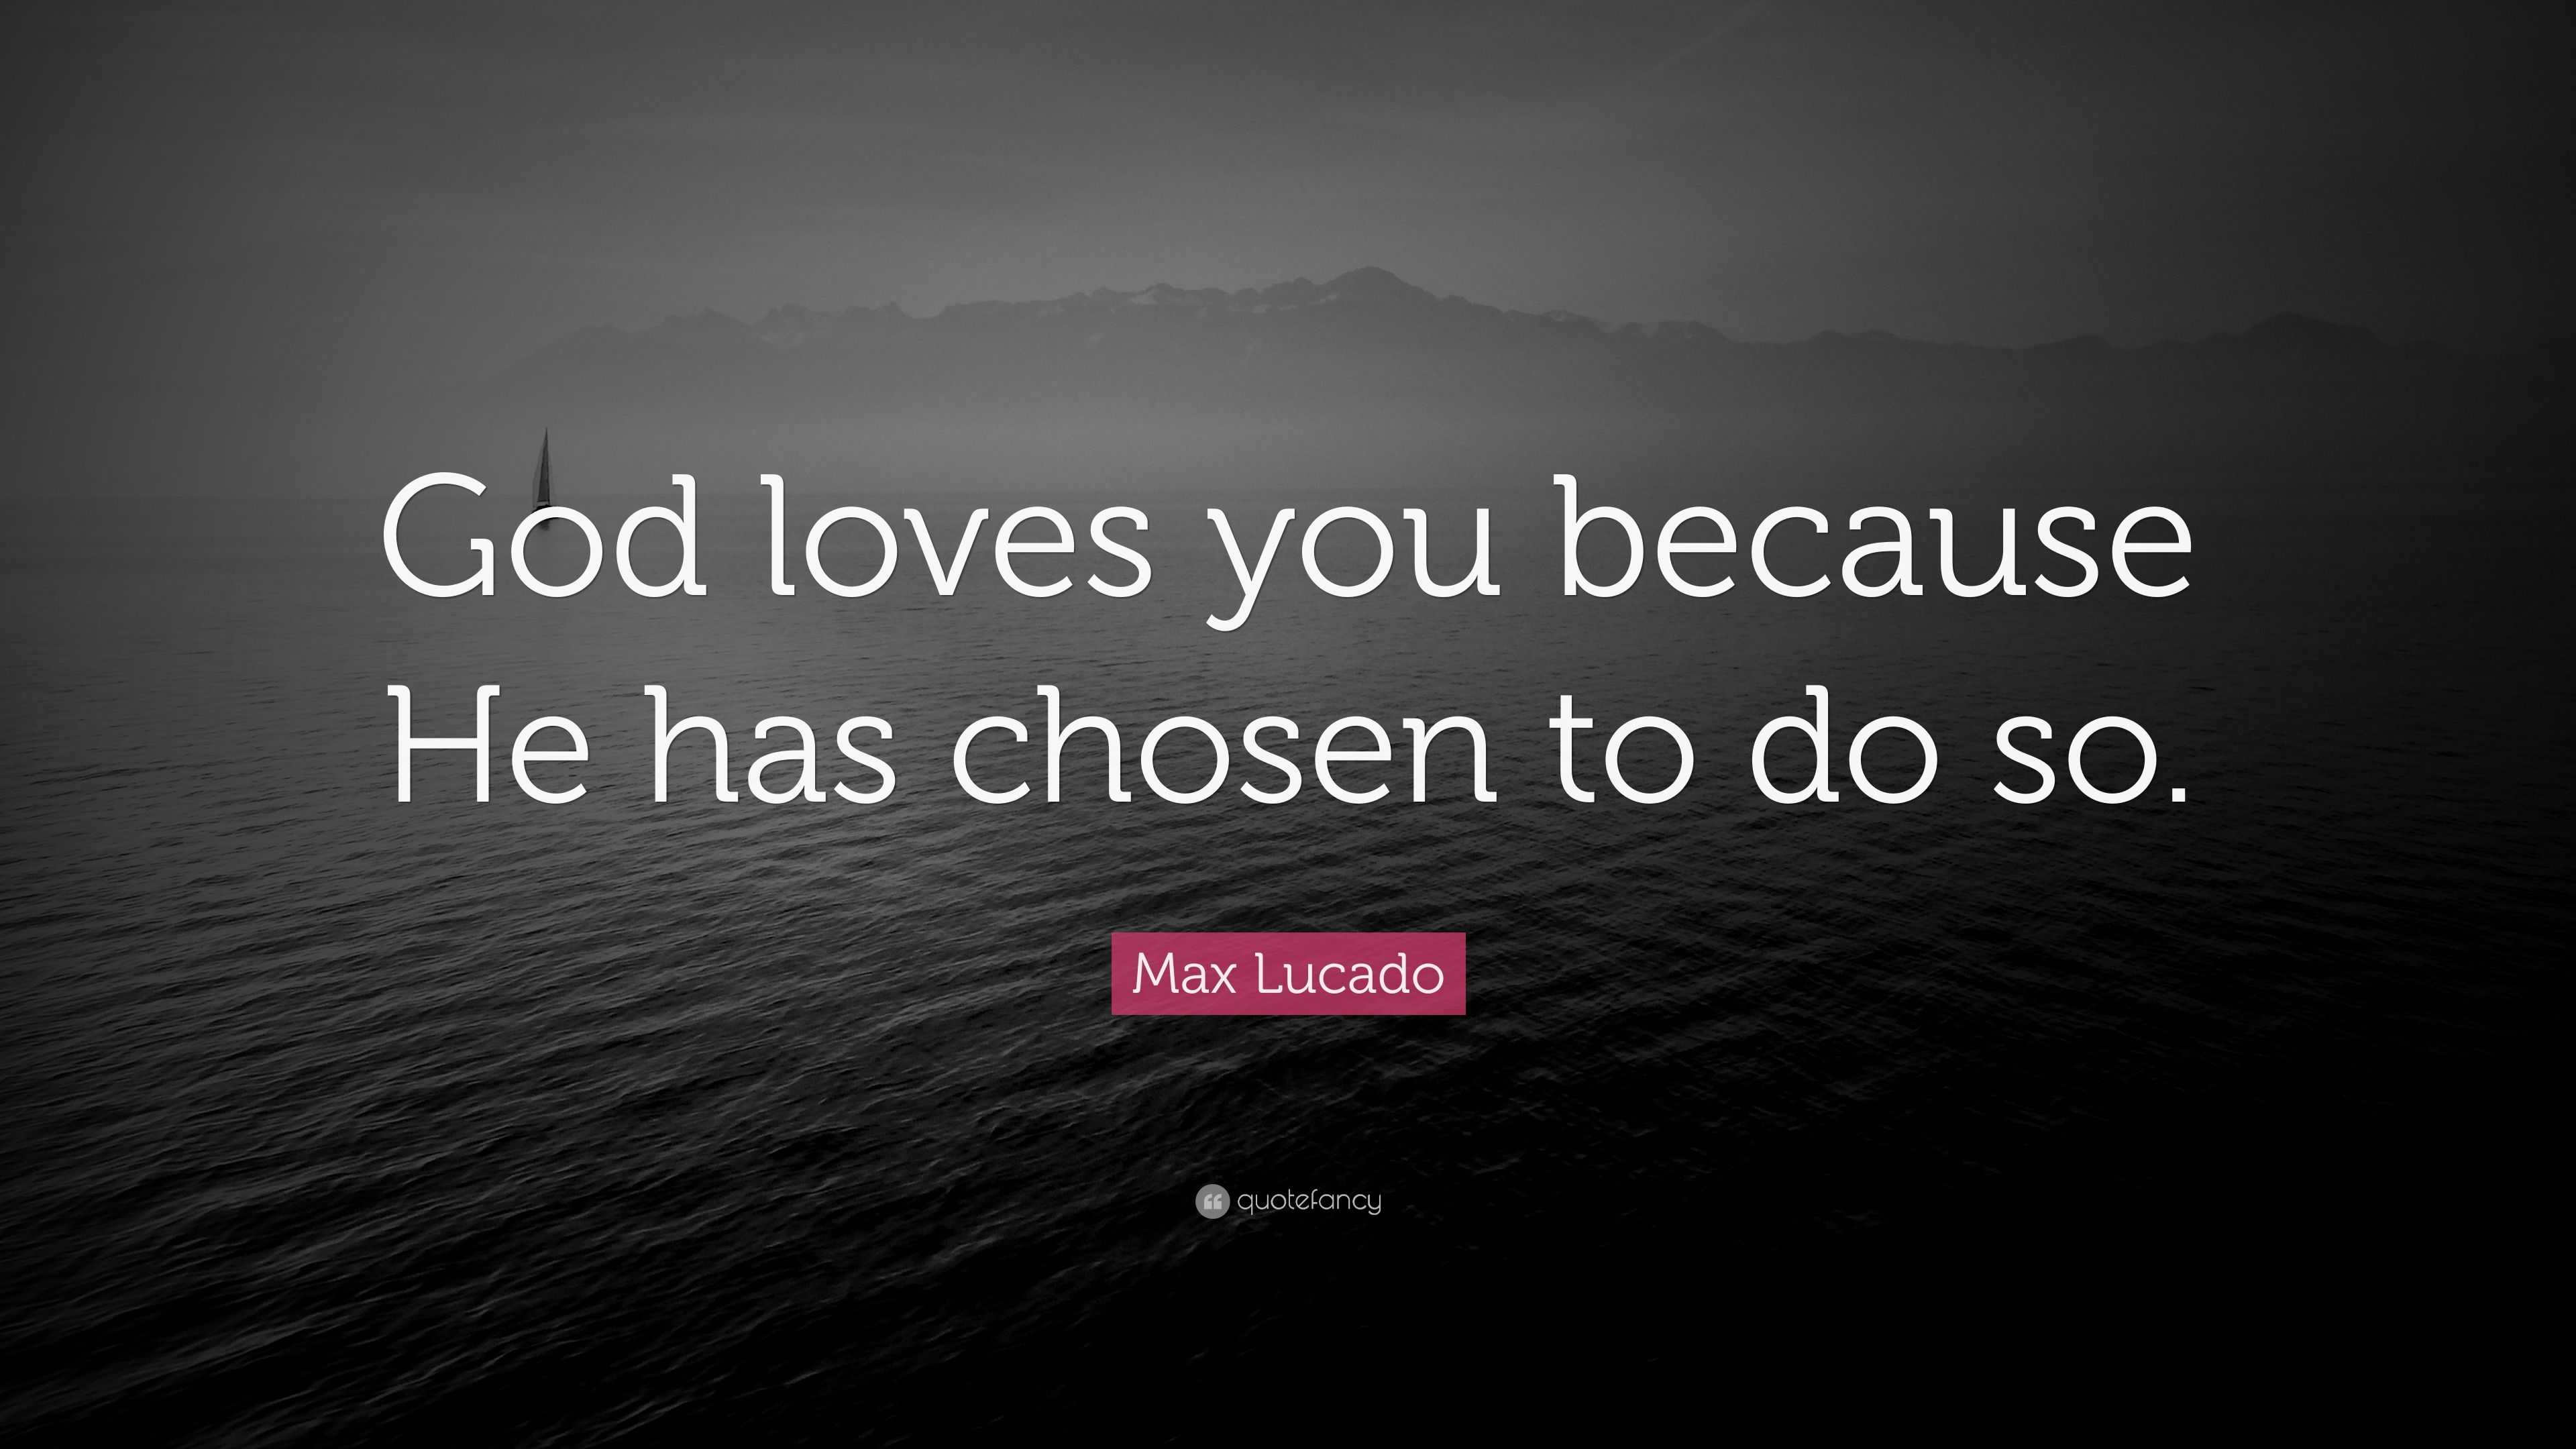 Max Lucado Quote “God loves you because He has chosen to do so